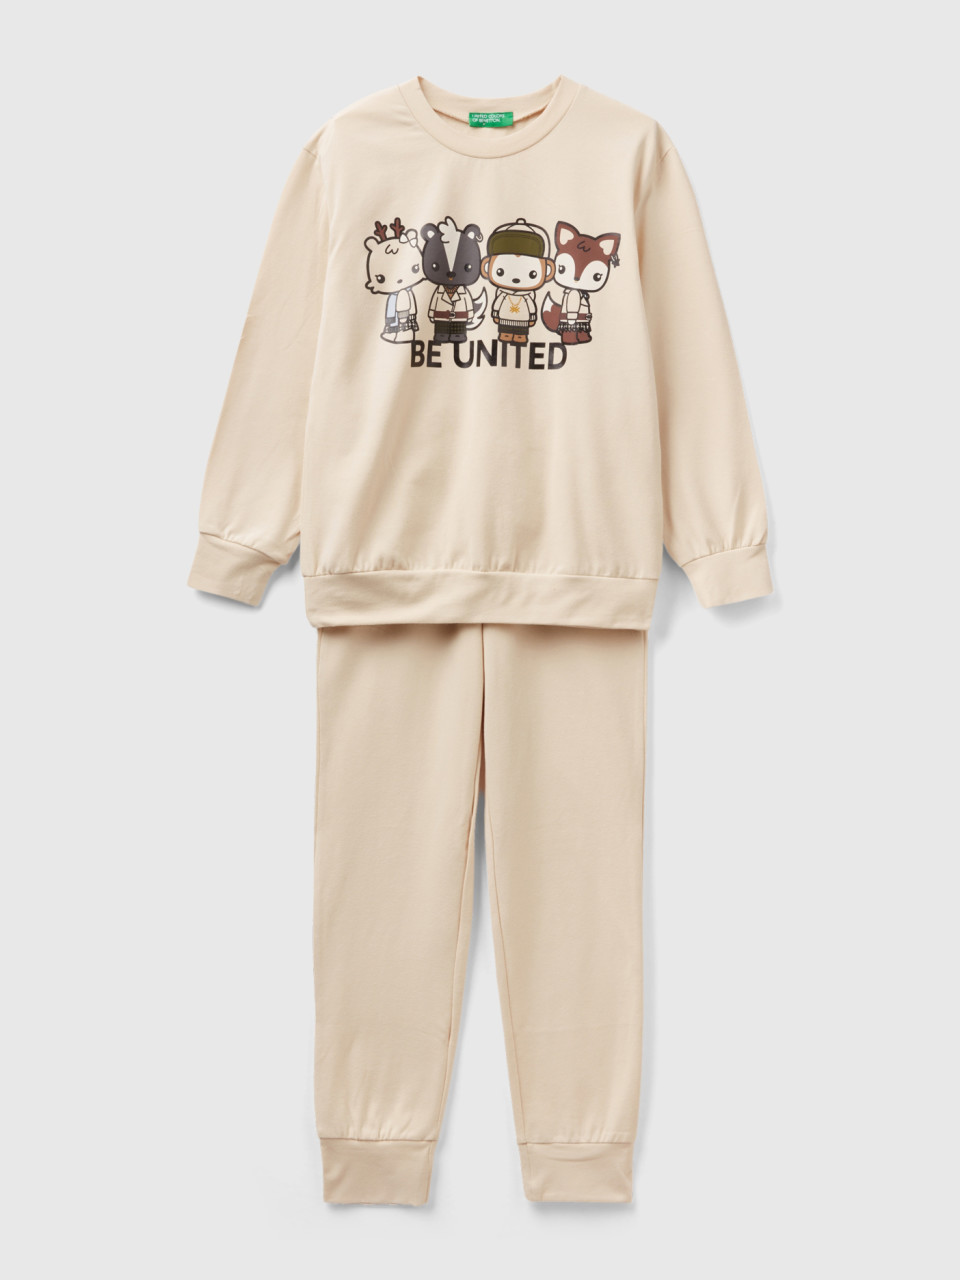 Benetton, Stretch Cotton Mascot Pyjamas, Beige, Kids